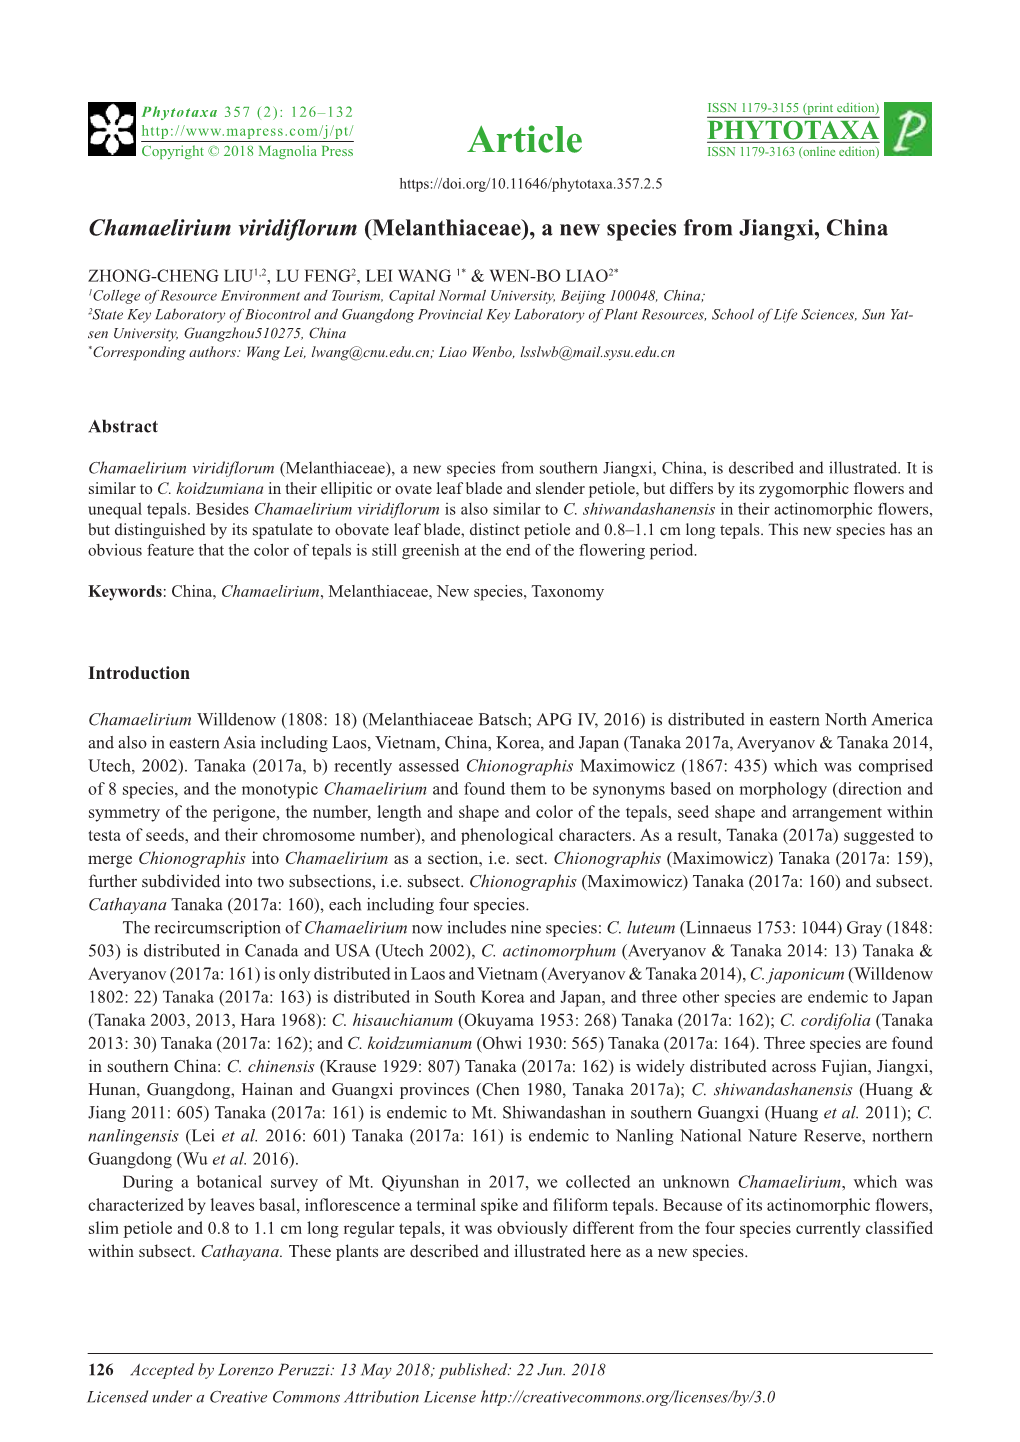 Chamaelirium Viridiflorum (Melanthiaceae), a New Species from Jiangxi, China